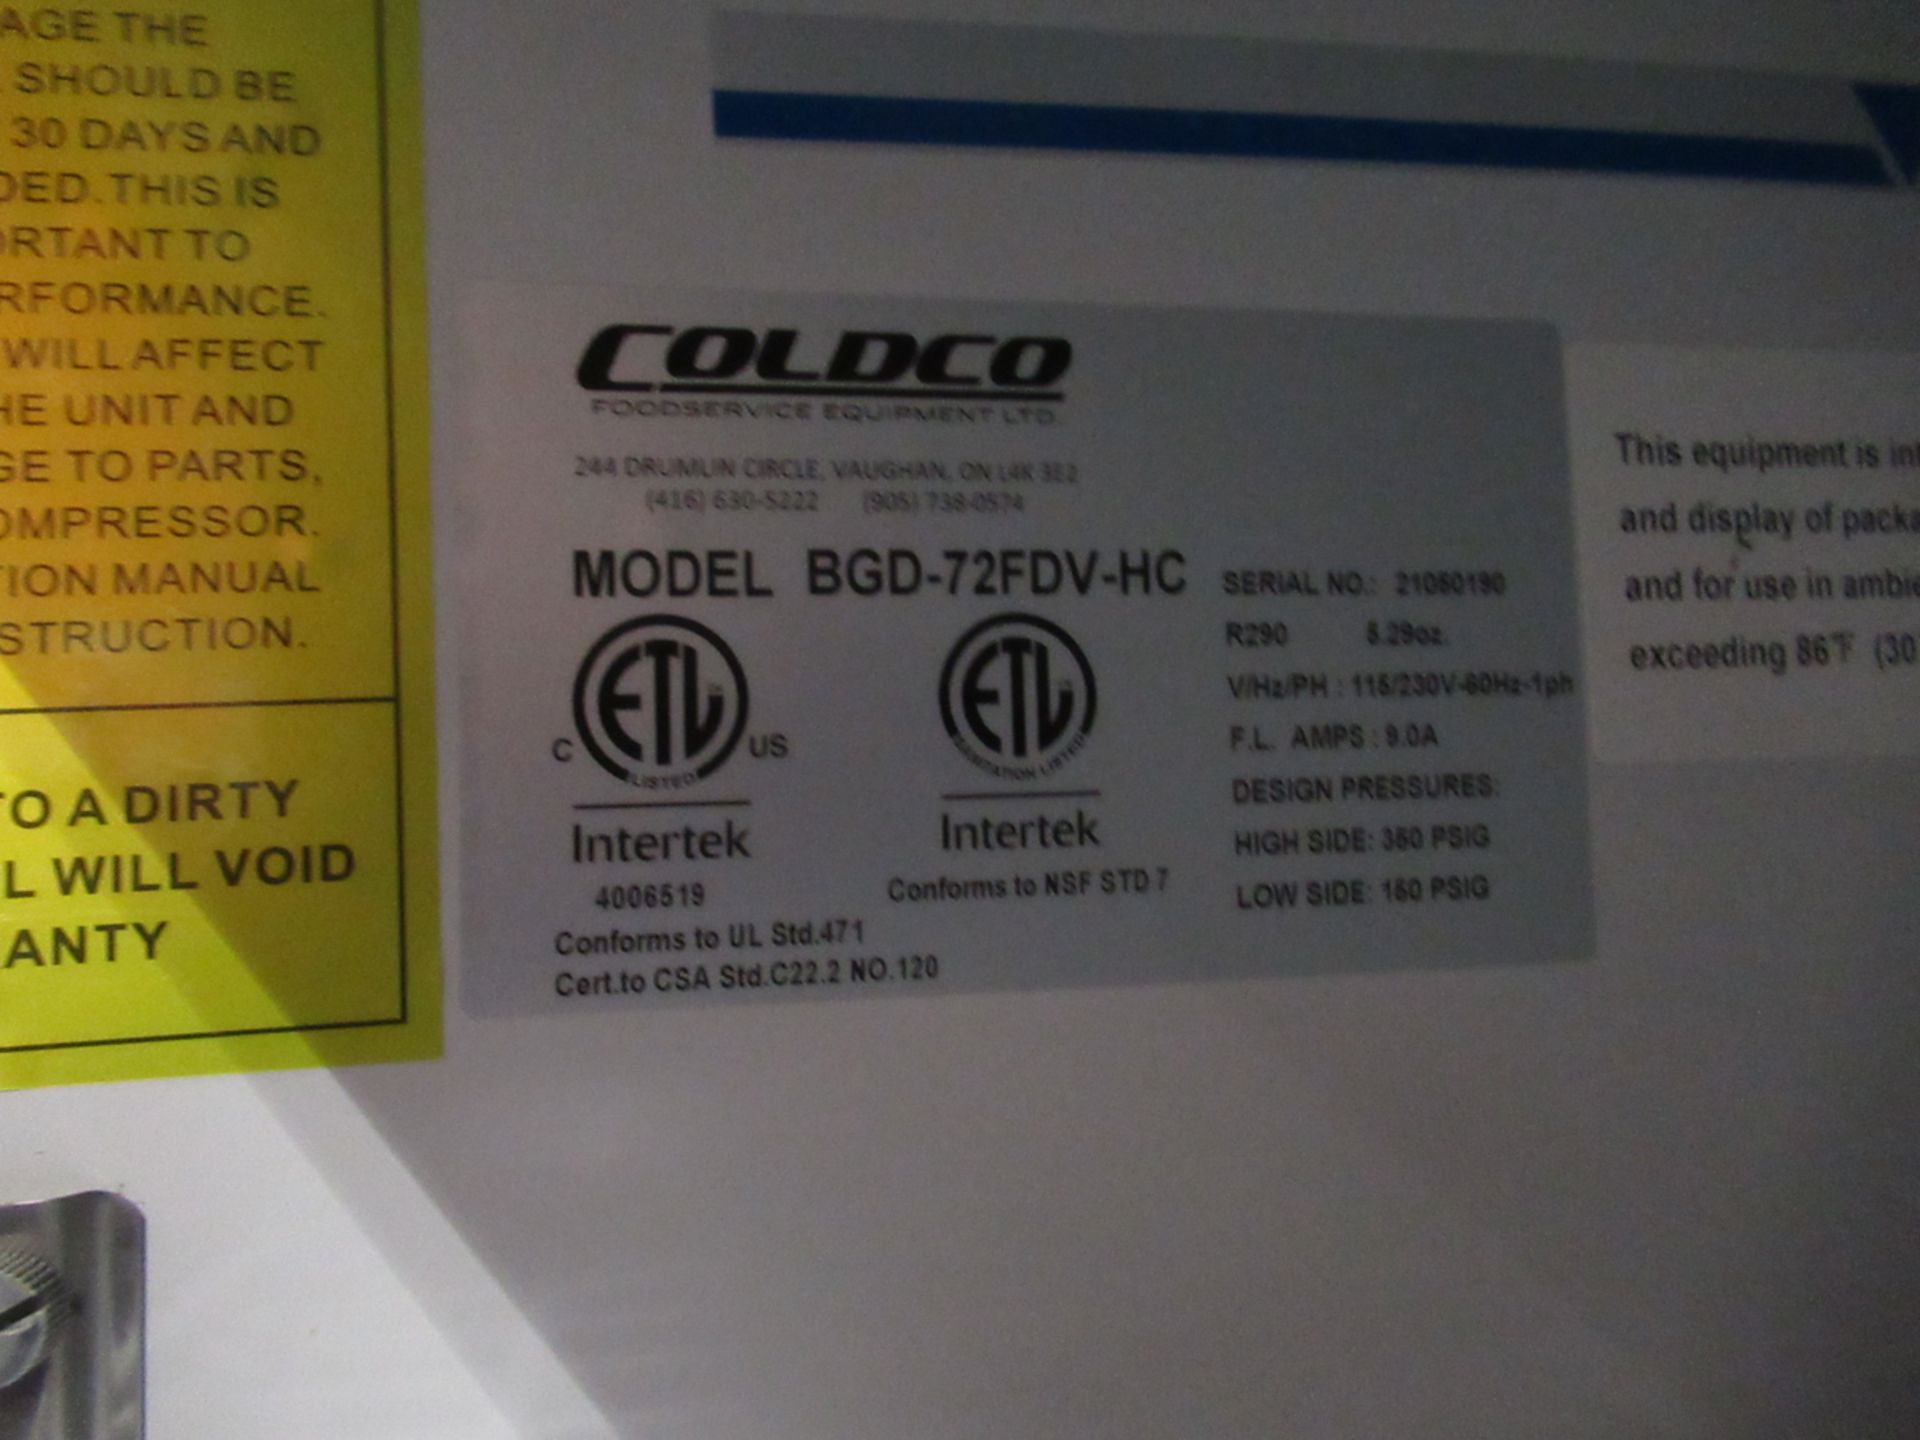 COLDCO 3-DOOR FREEZER MO. BGD-72FDV-HC, 81", - Image 4 of 4